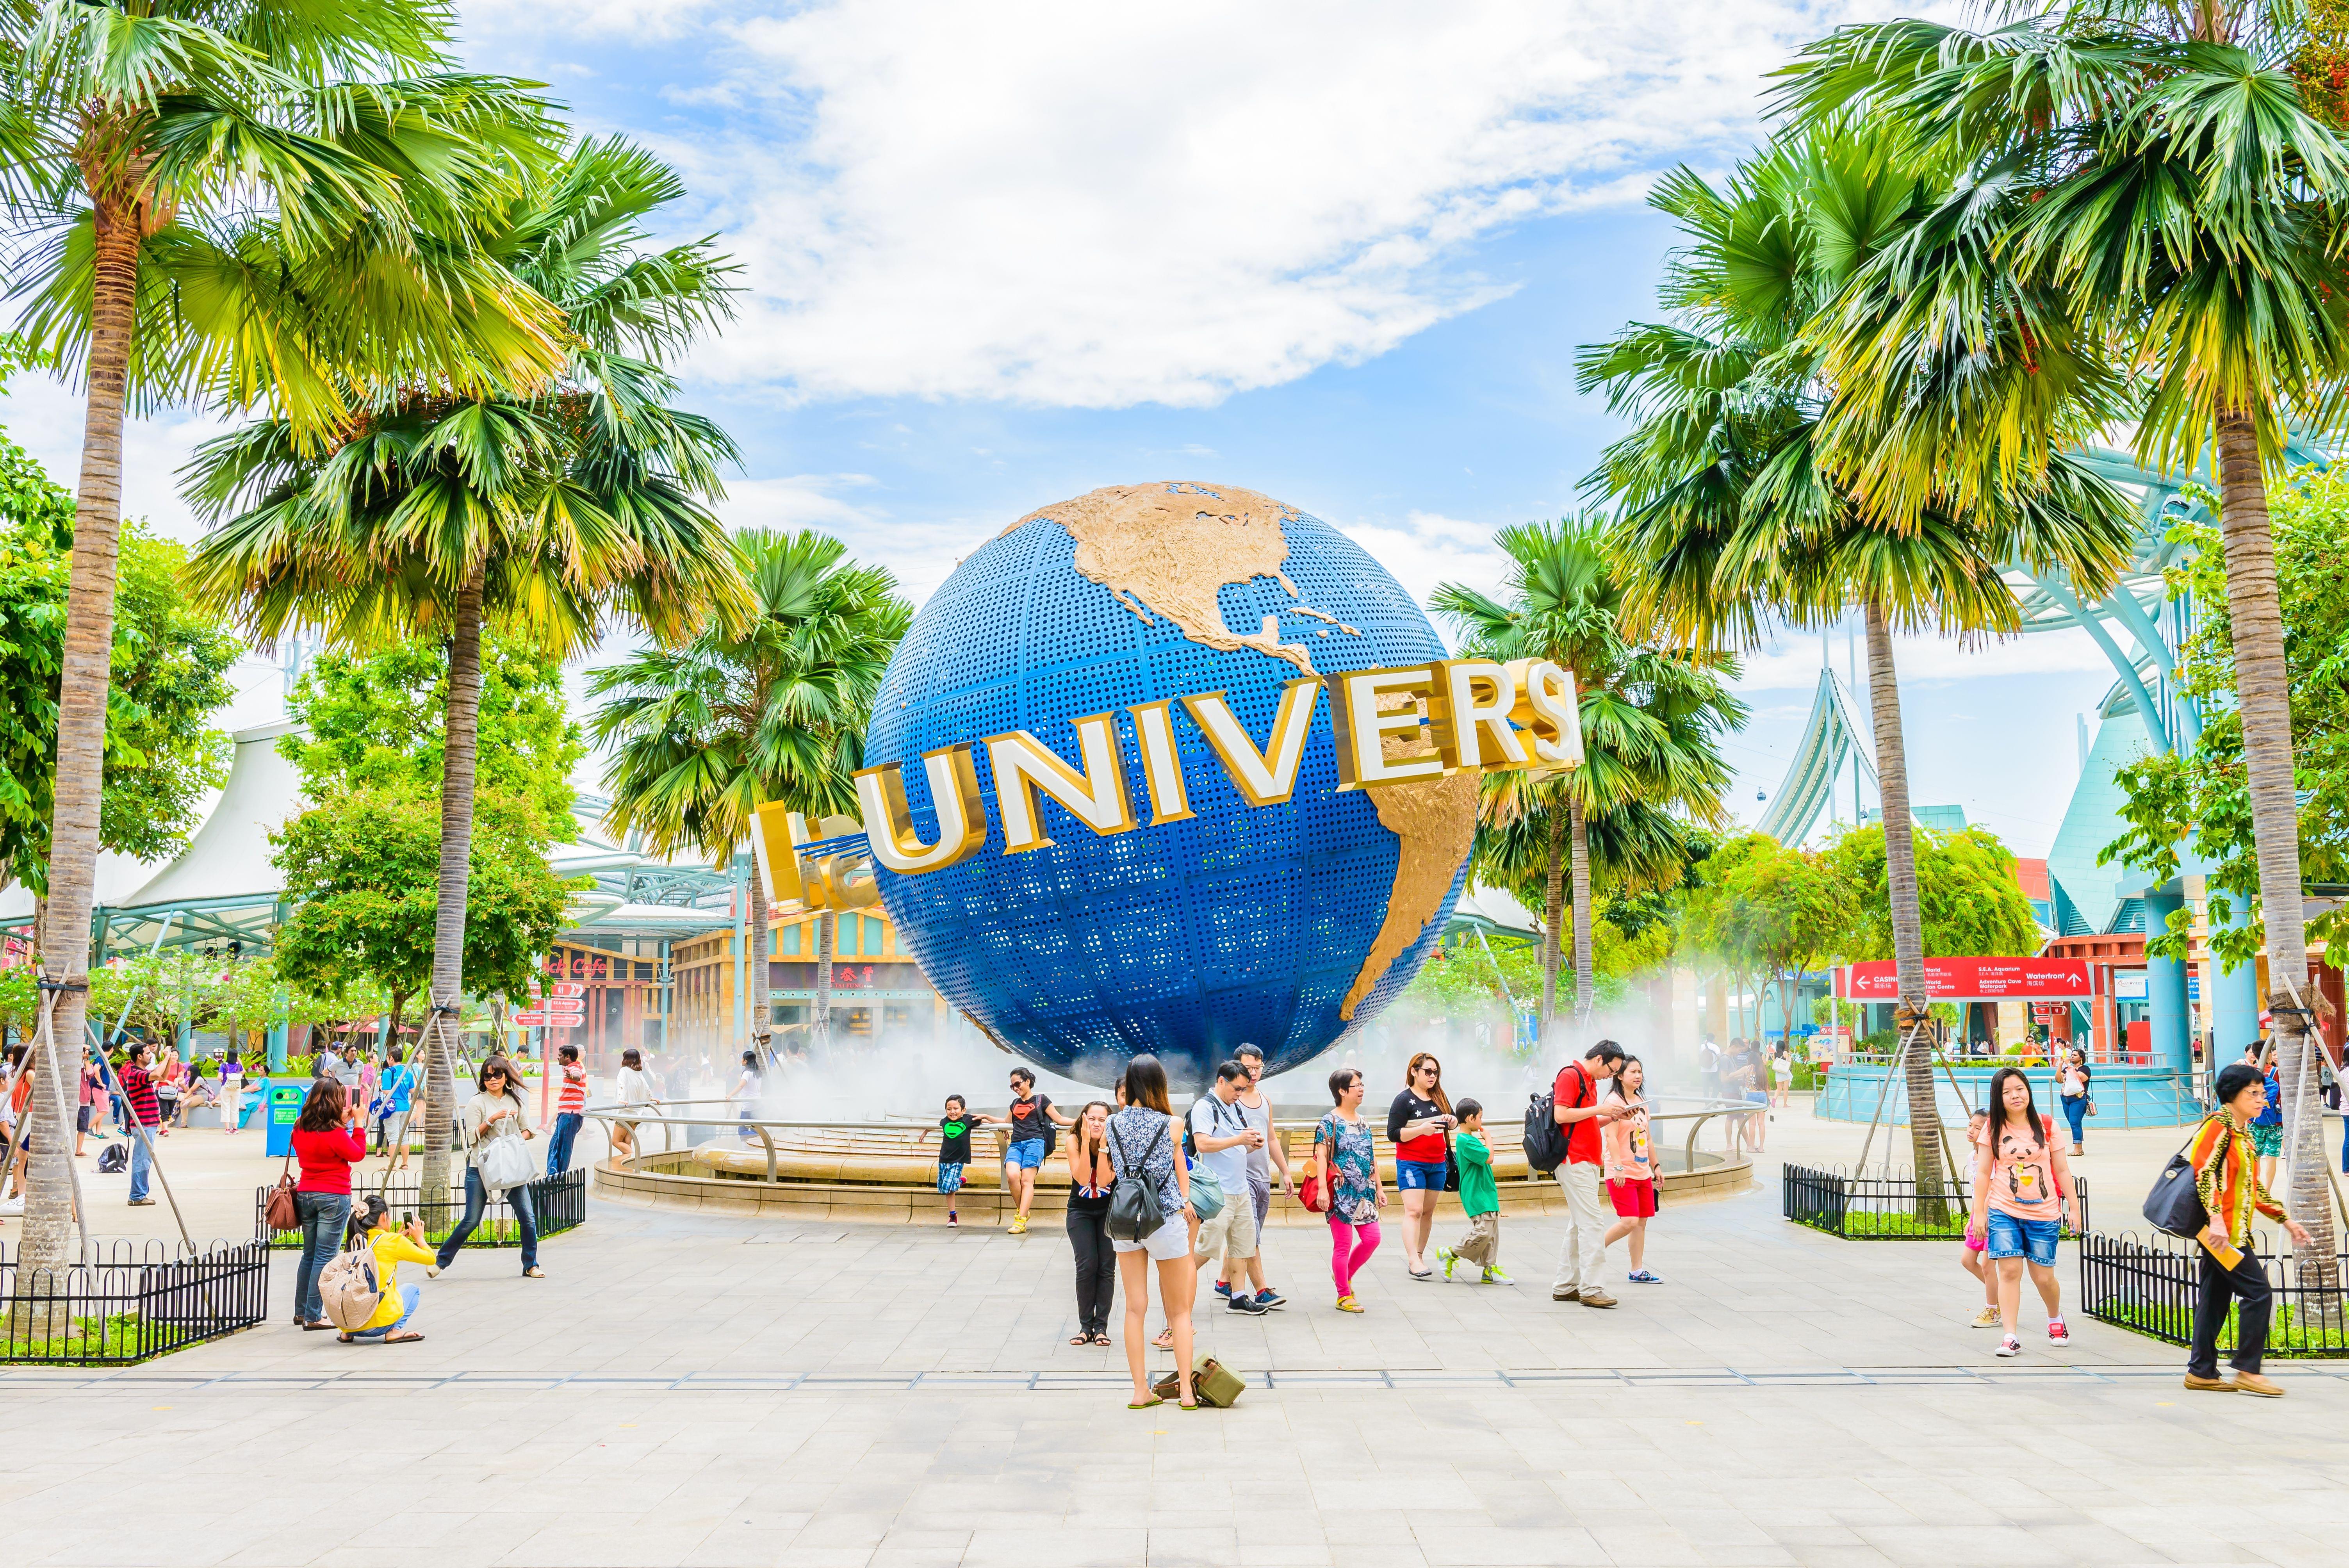 About Universal Studios Singapore